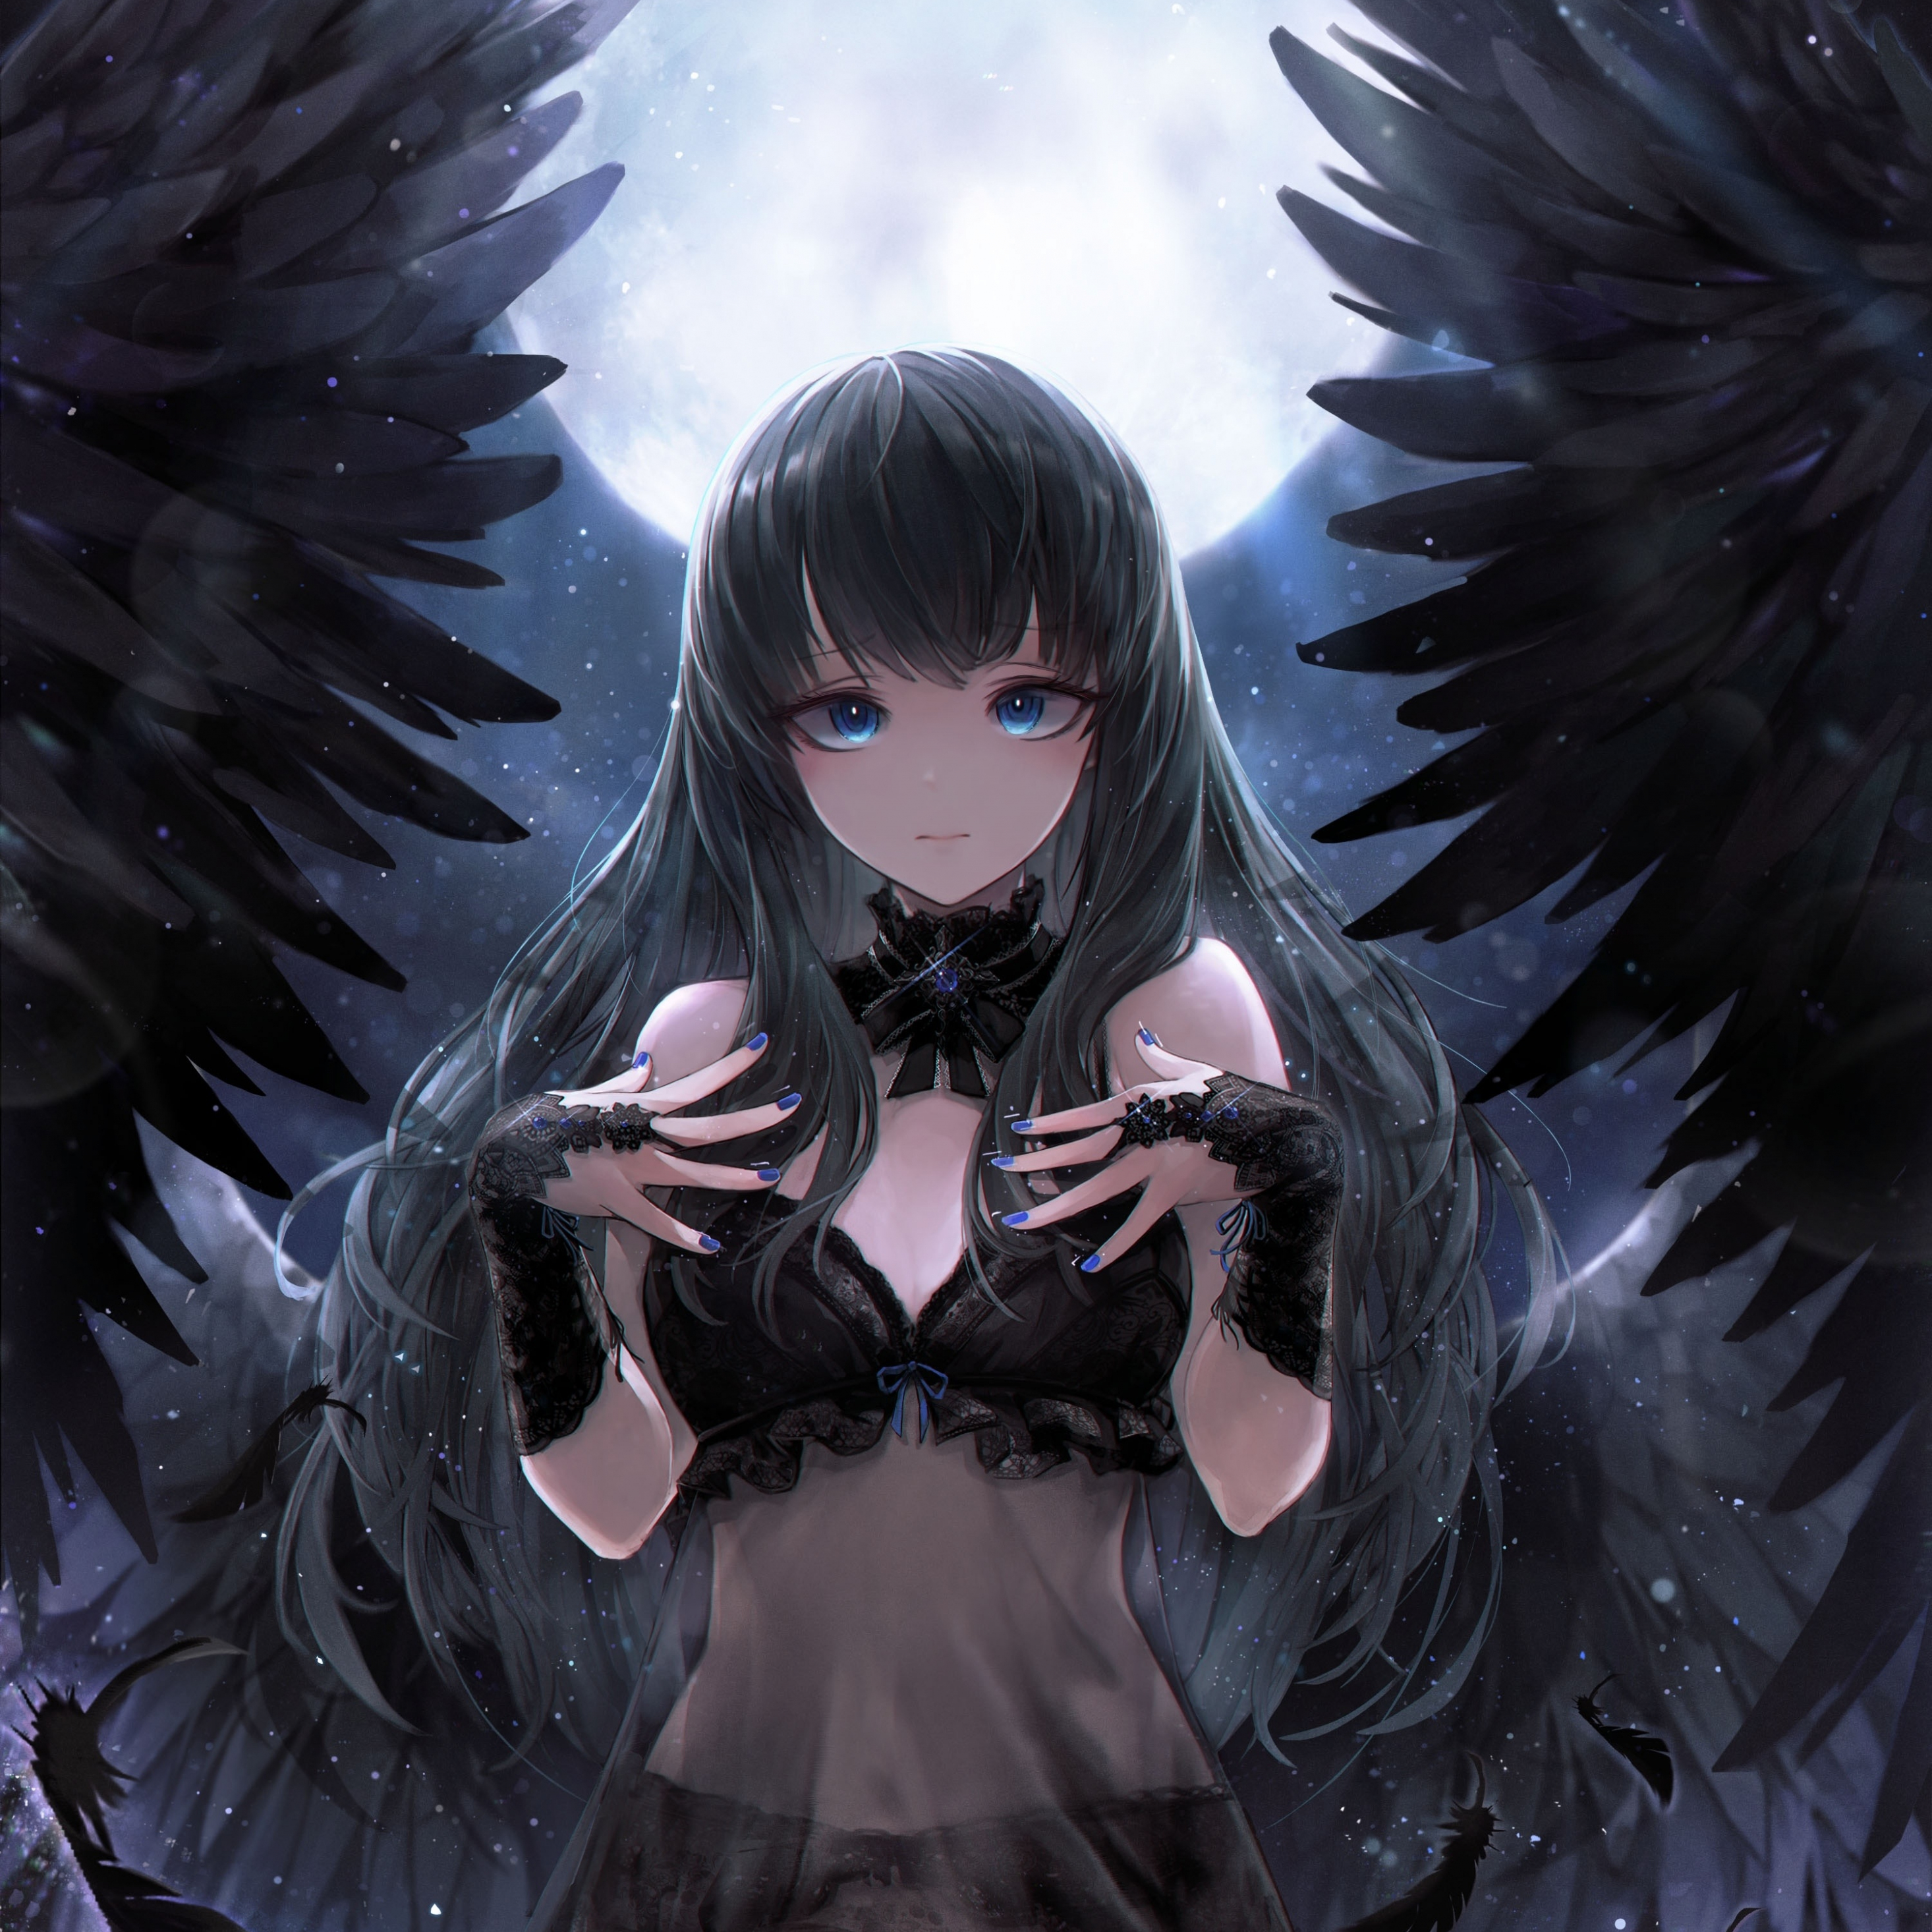 Download Black Angel Cute Anime Girl Art 2932x2932 Wallpaper Ipad Pro Retina 2932x2932 Image Background